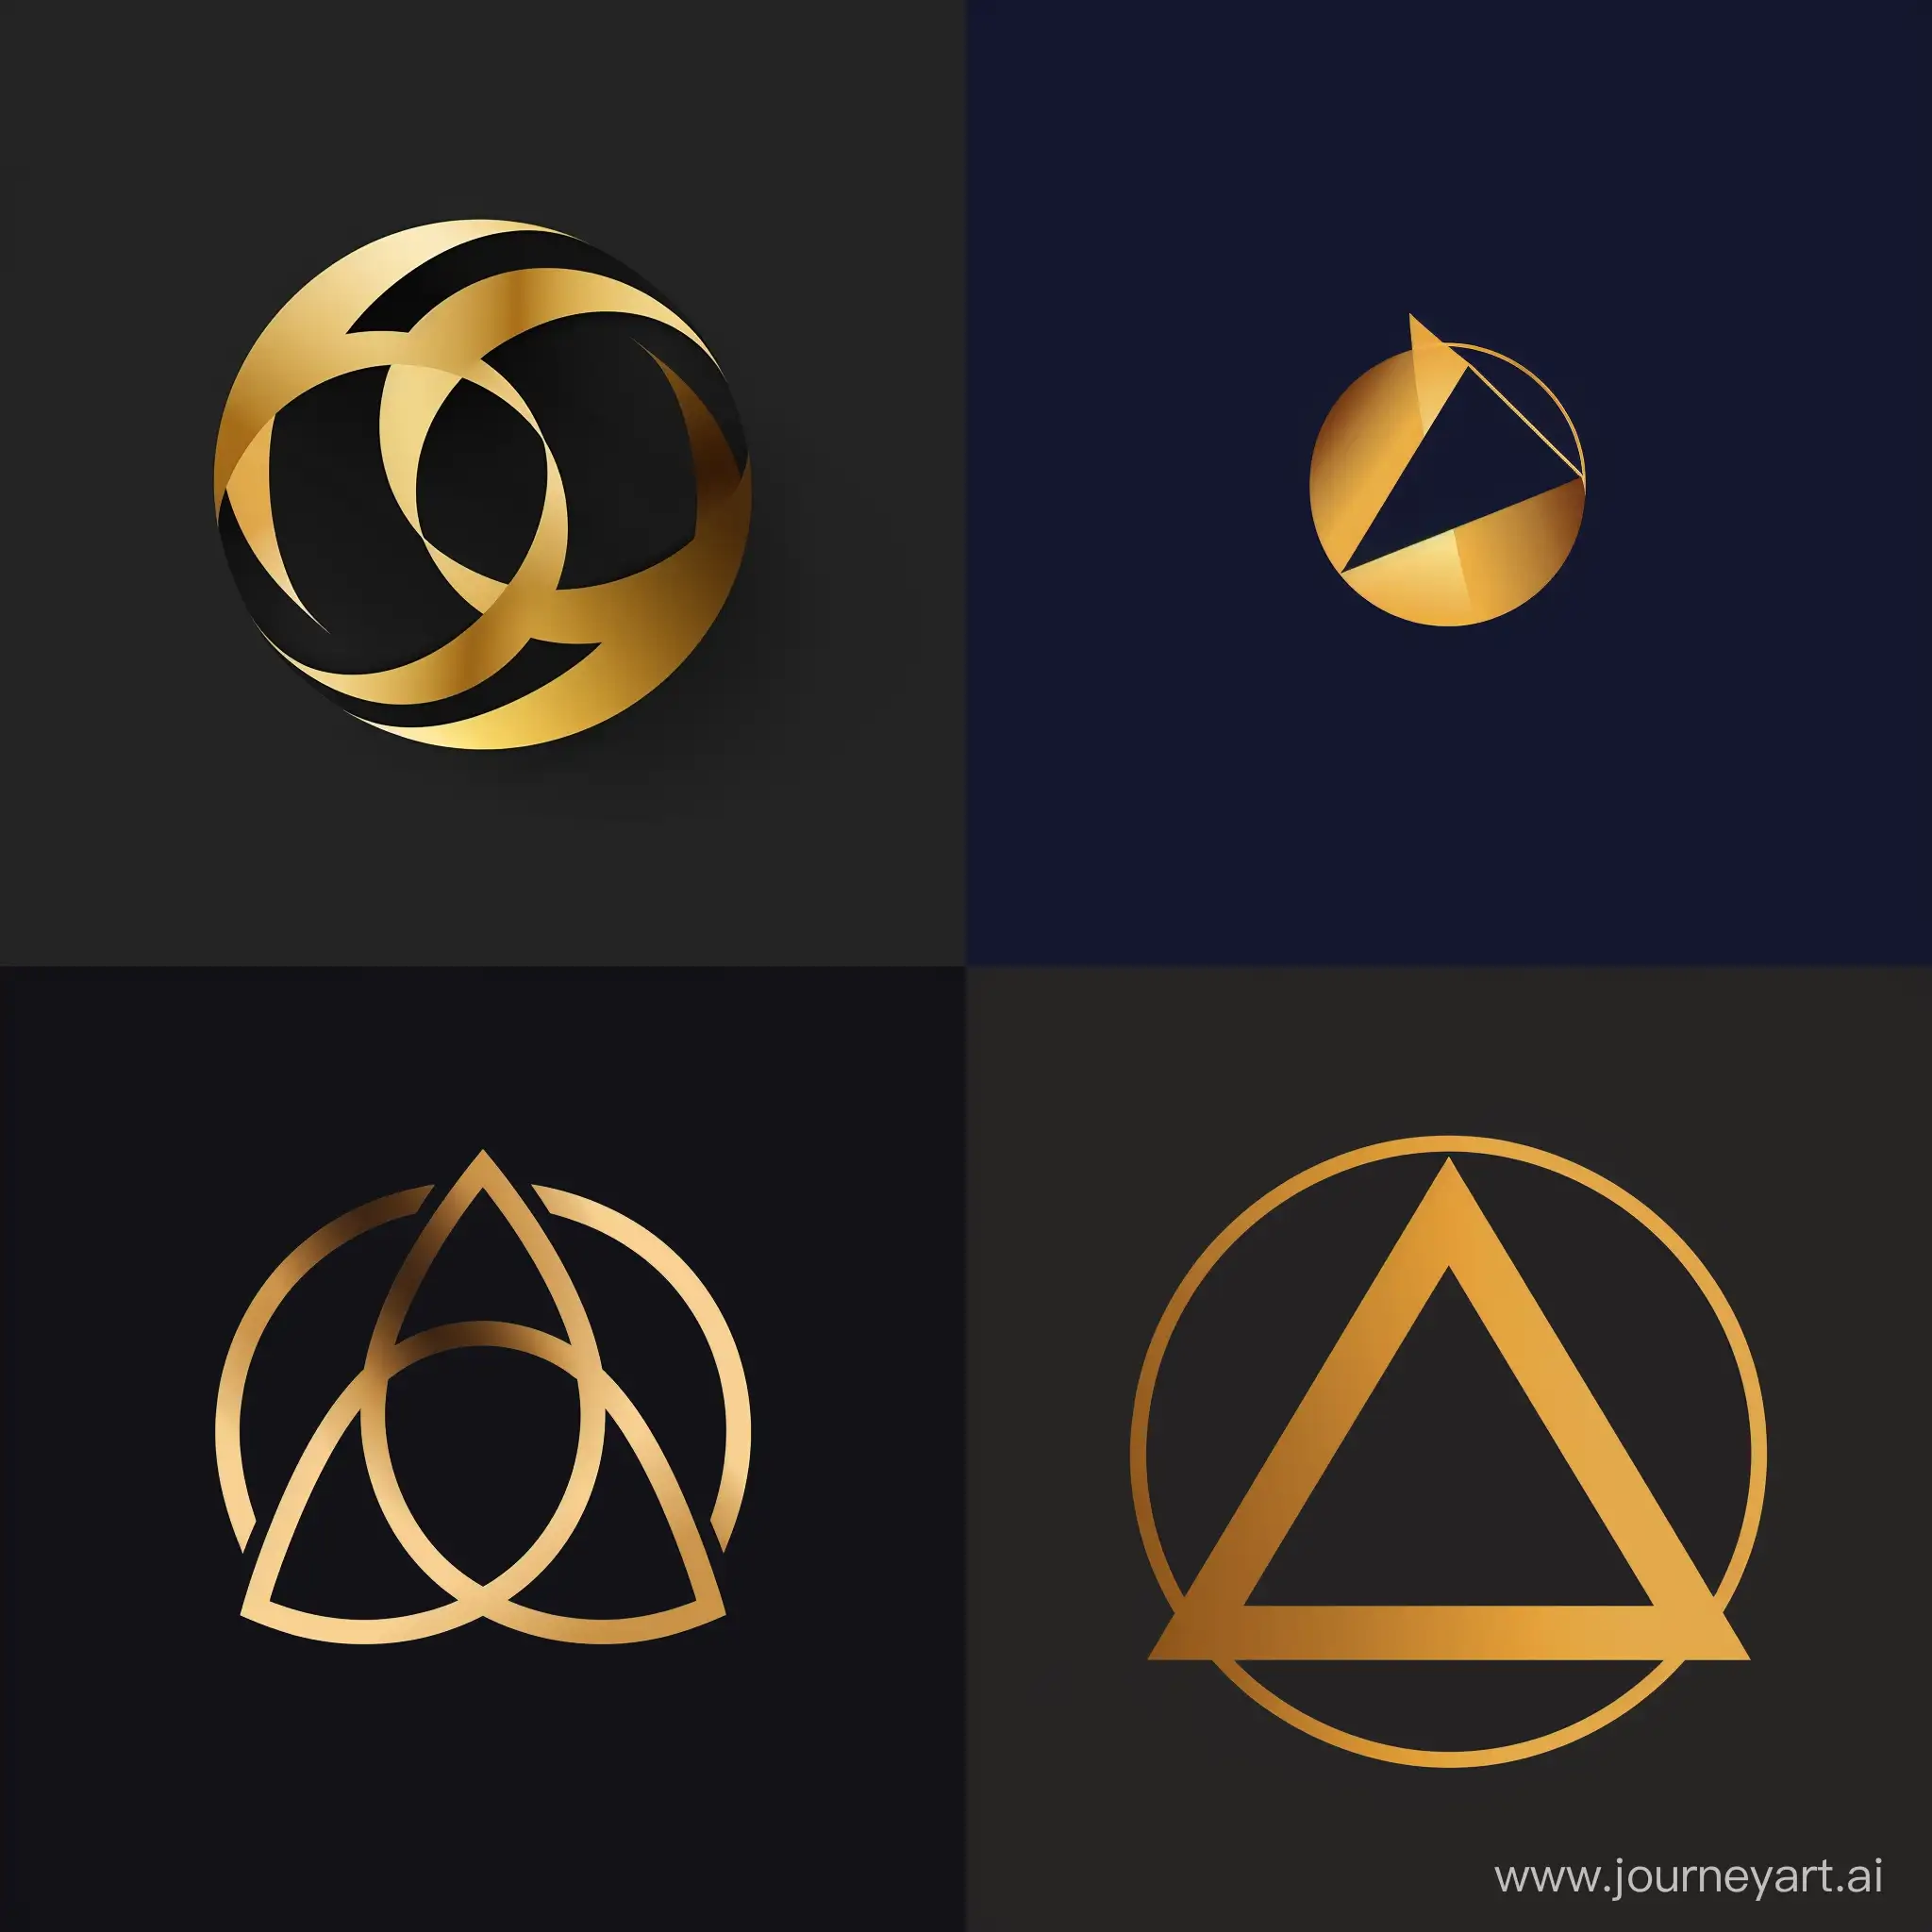 Golden-Ratio-Logo-Design-Vector-Illustration